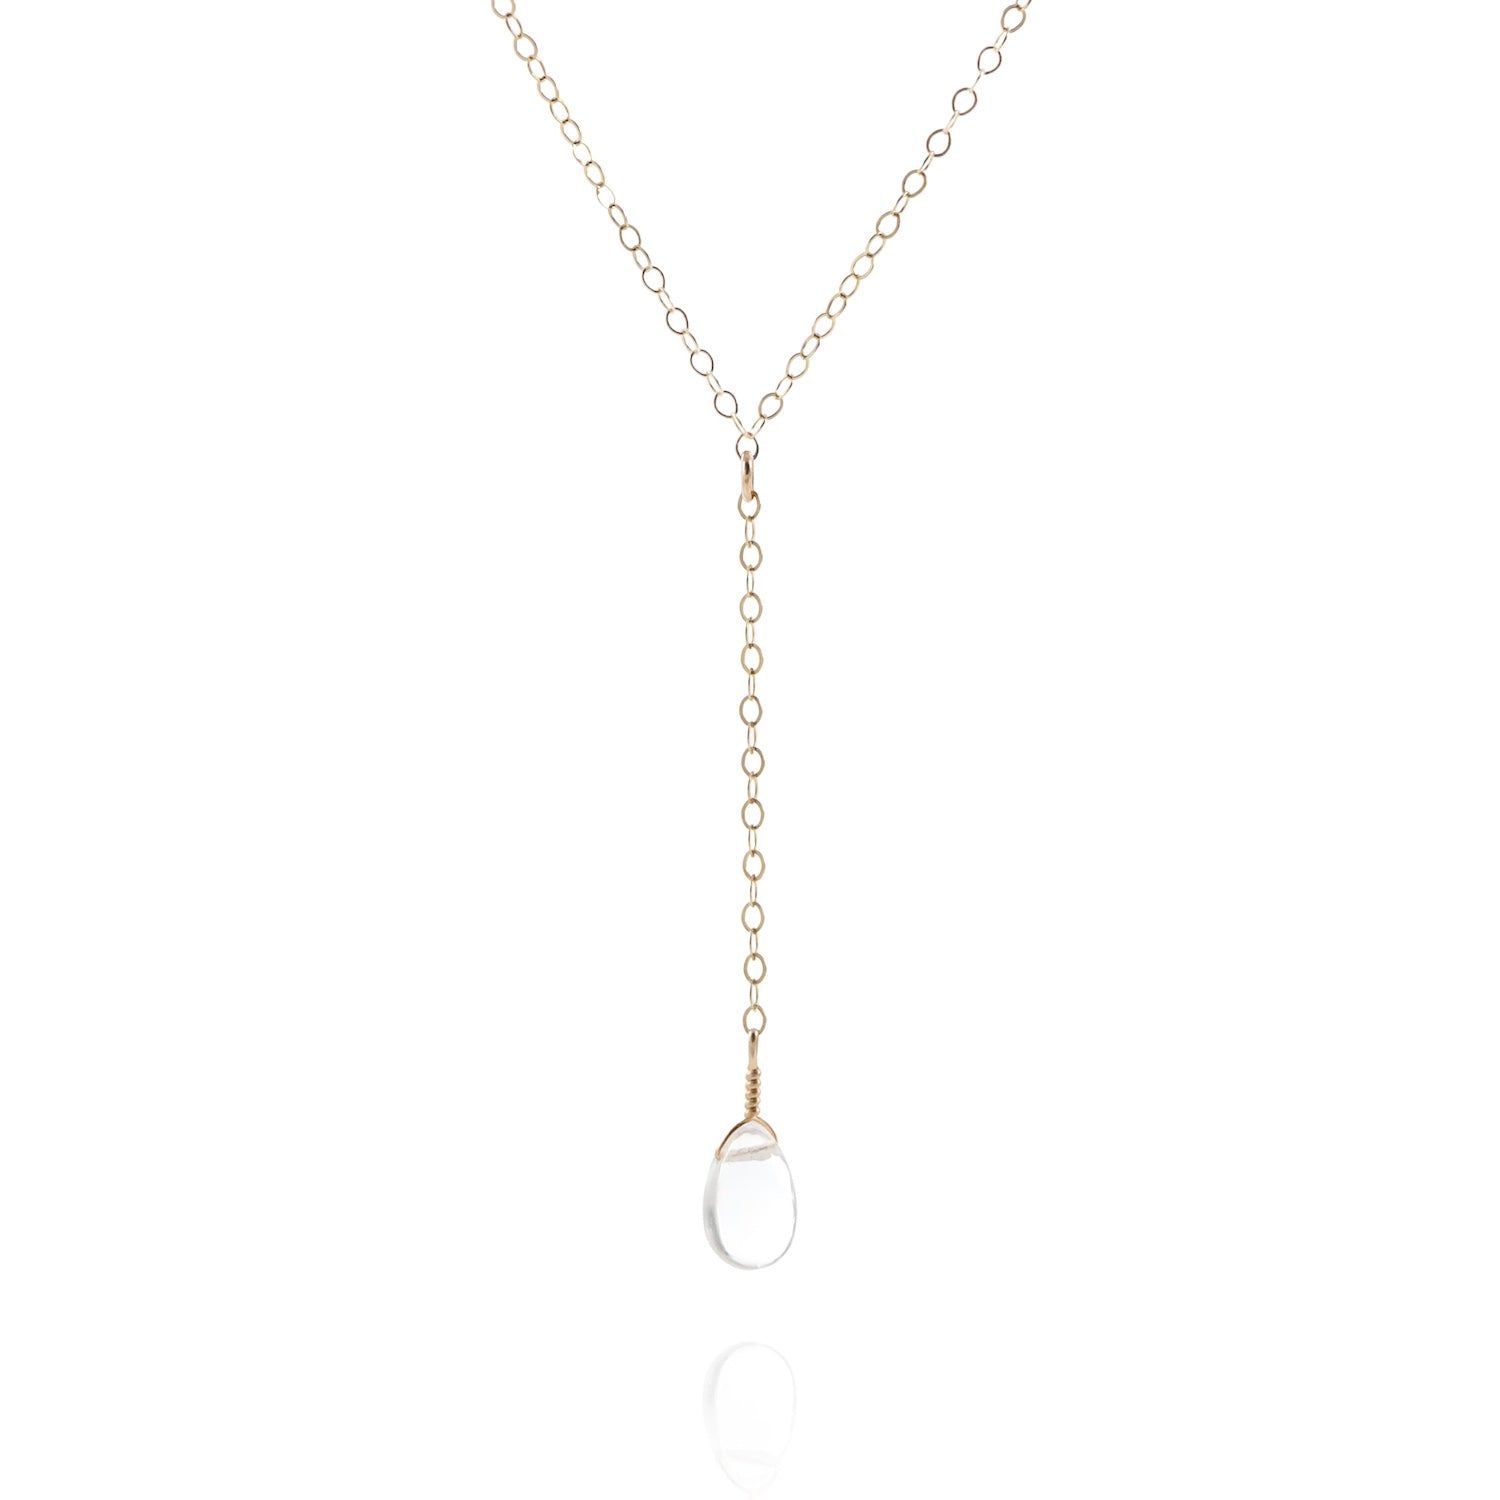 clear quartz lariat necklace in gold